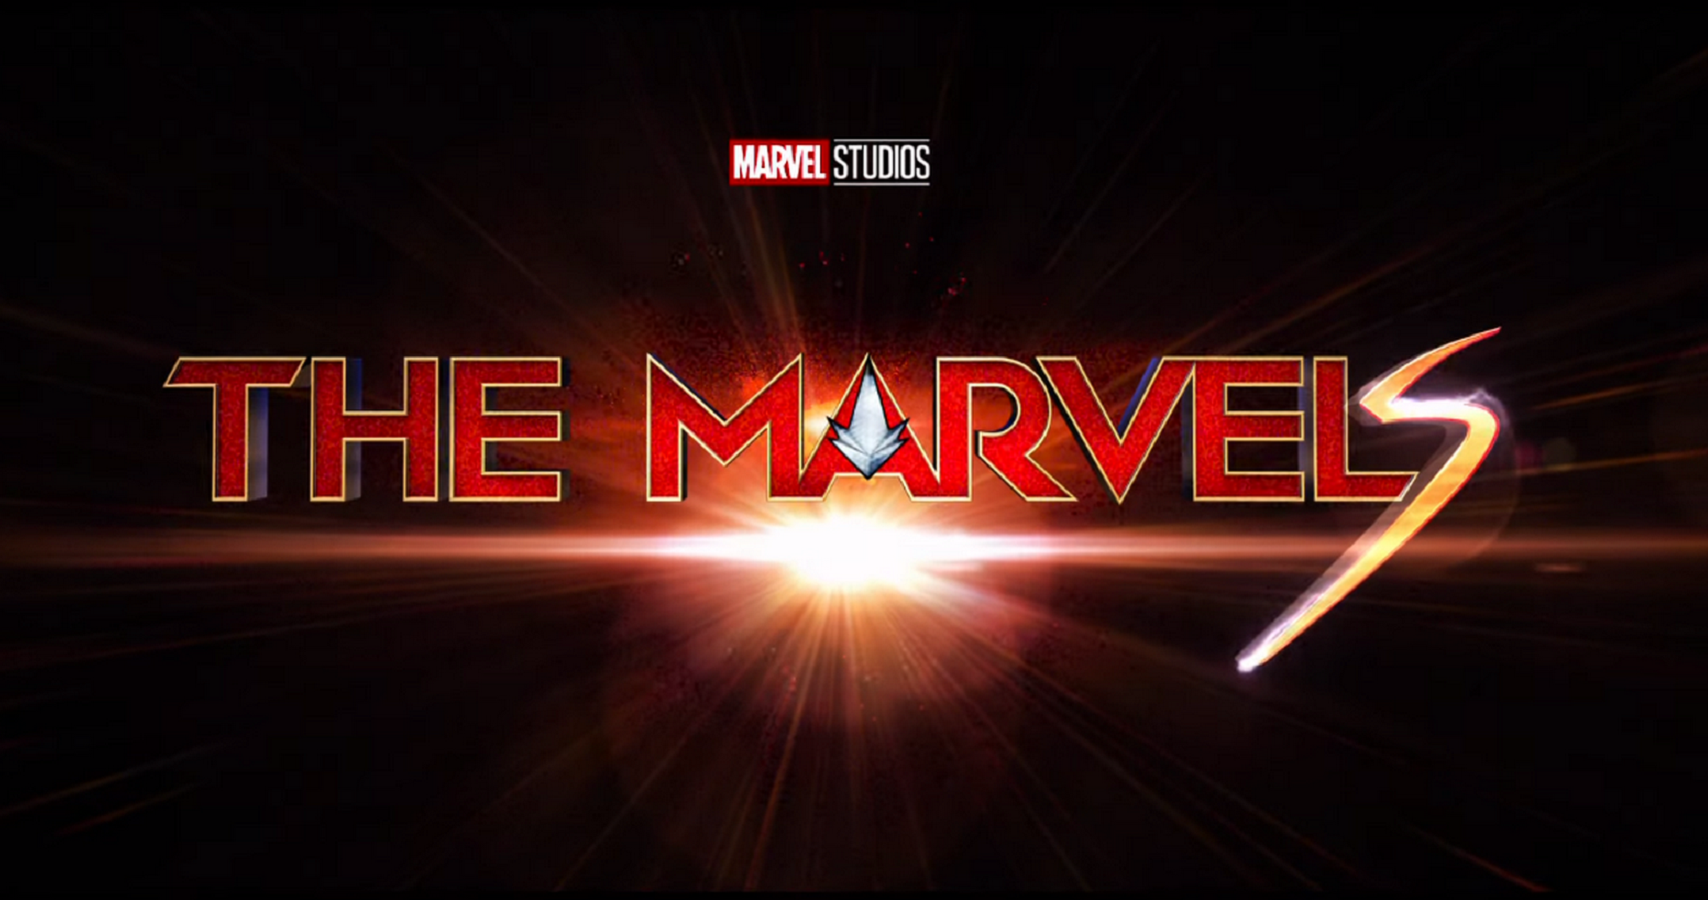 The Marvels logo